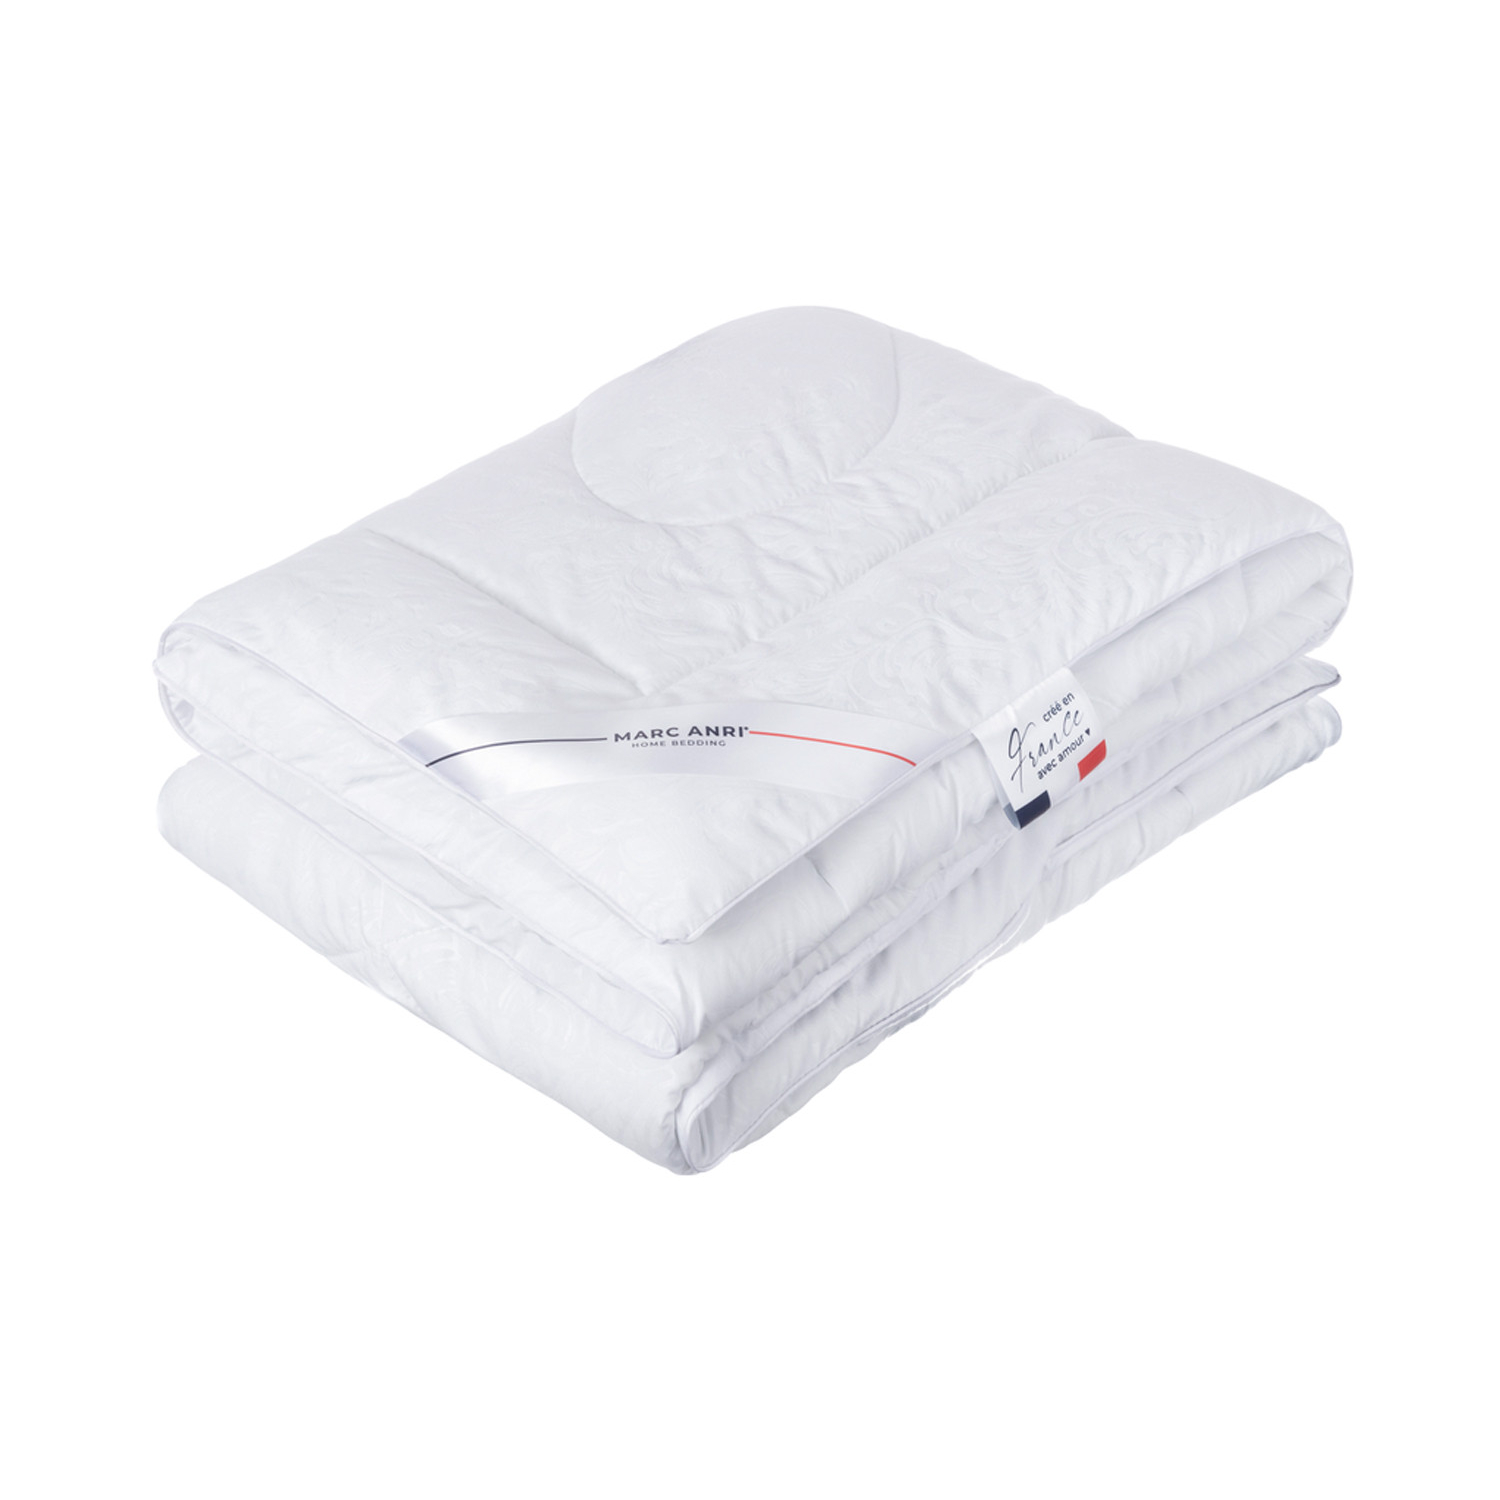 Одеяло Marc Anri Chinon белое 200х220 см (MA-MF) одеяло marc anri rouffach белое 200х220 см ma ec